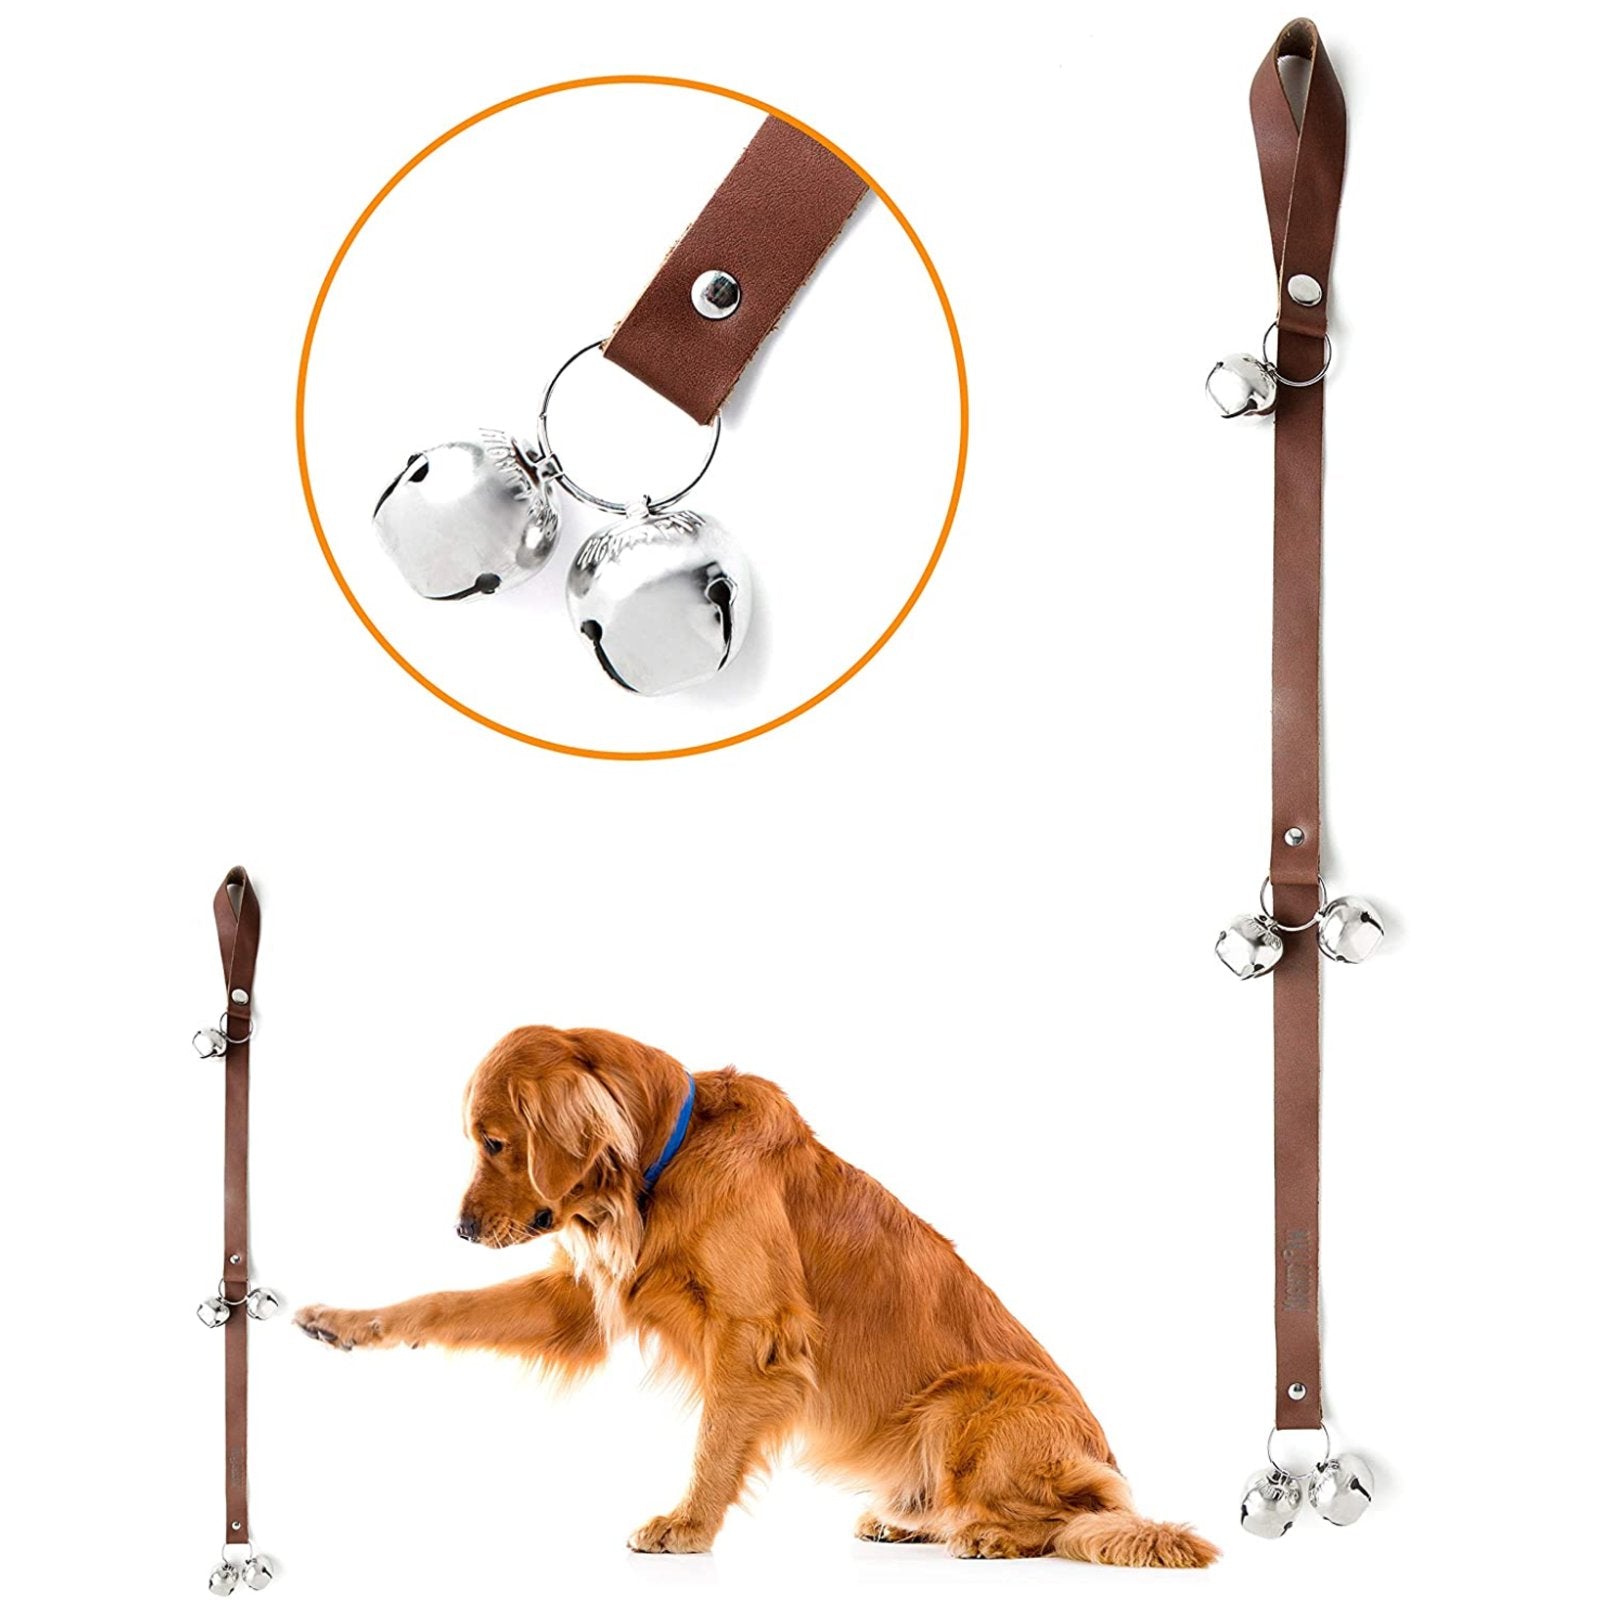 Tinkle Bells - Leather (Dog Training Bells)